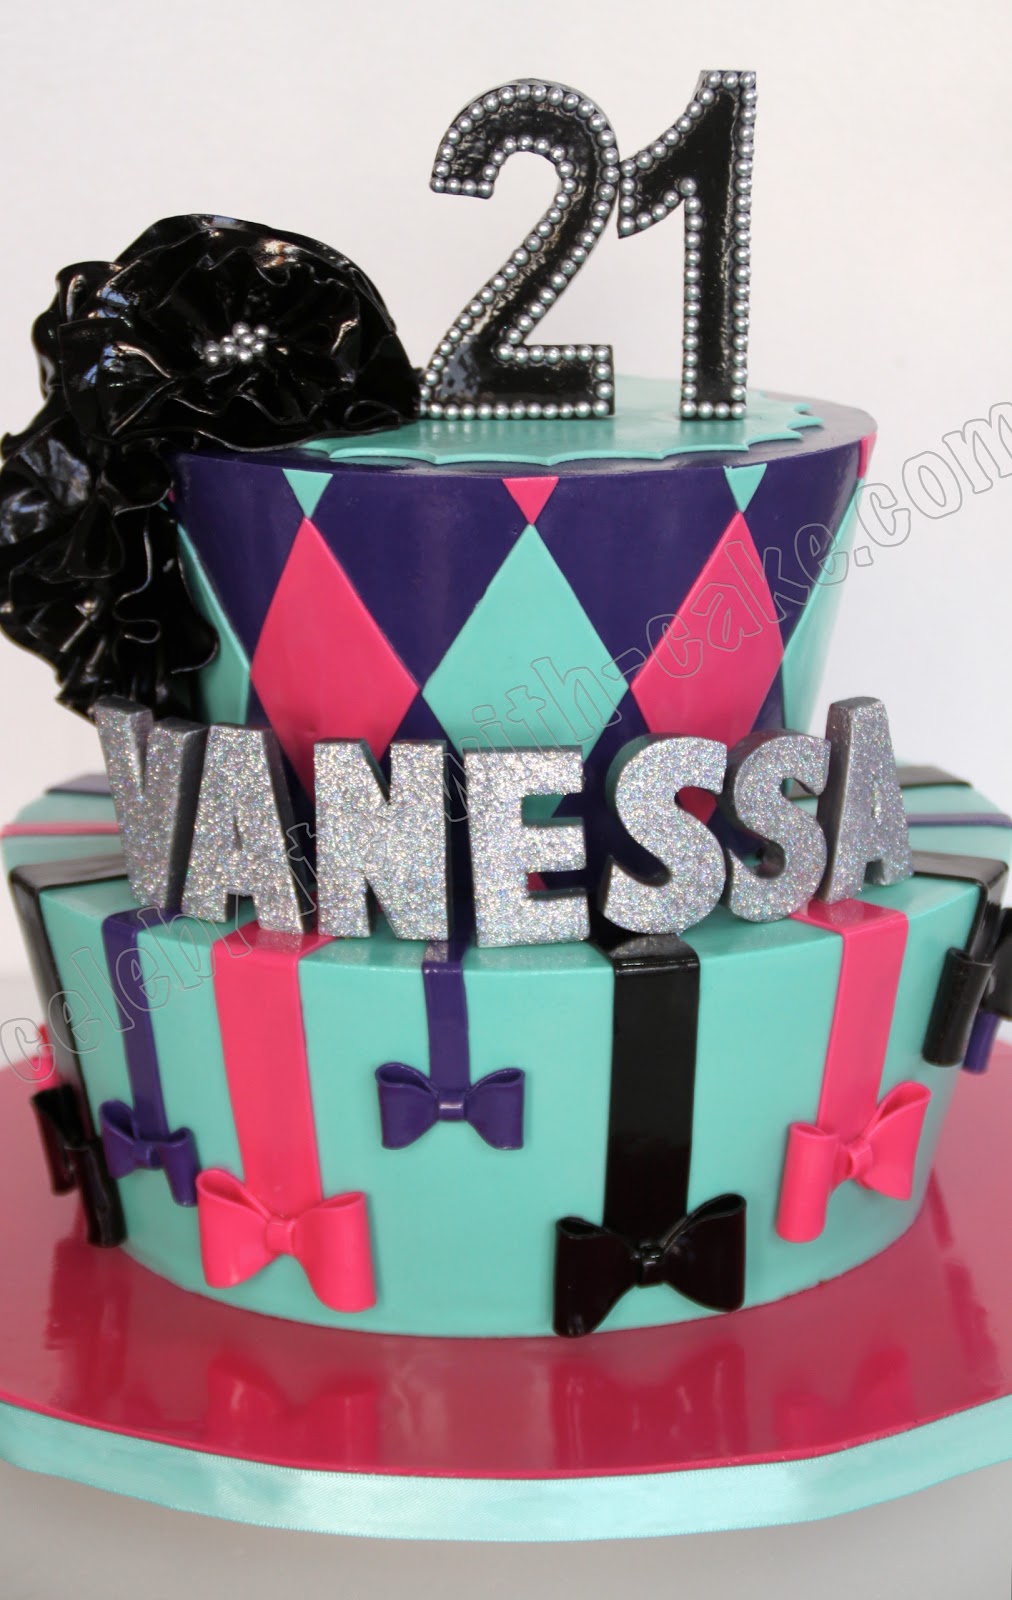 Celebrate with Cake!: Ribbon 21st Birthday 2 tier Cake